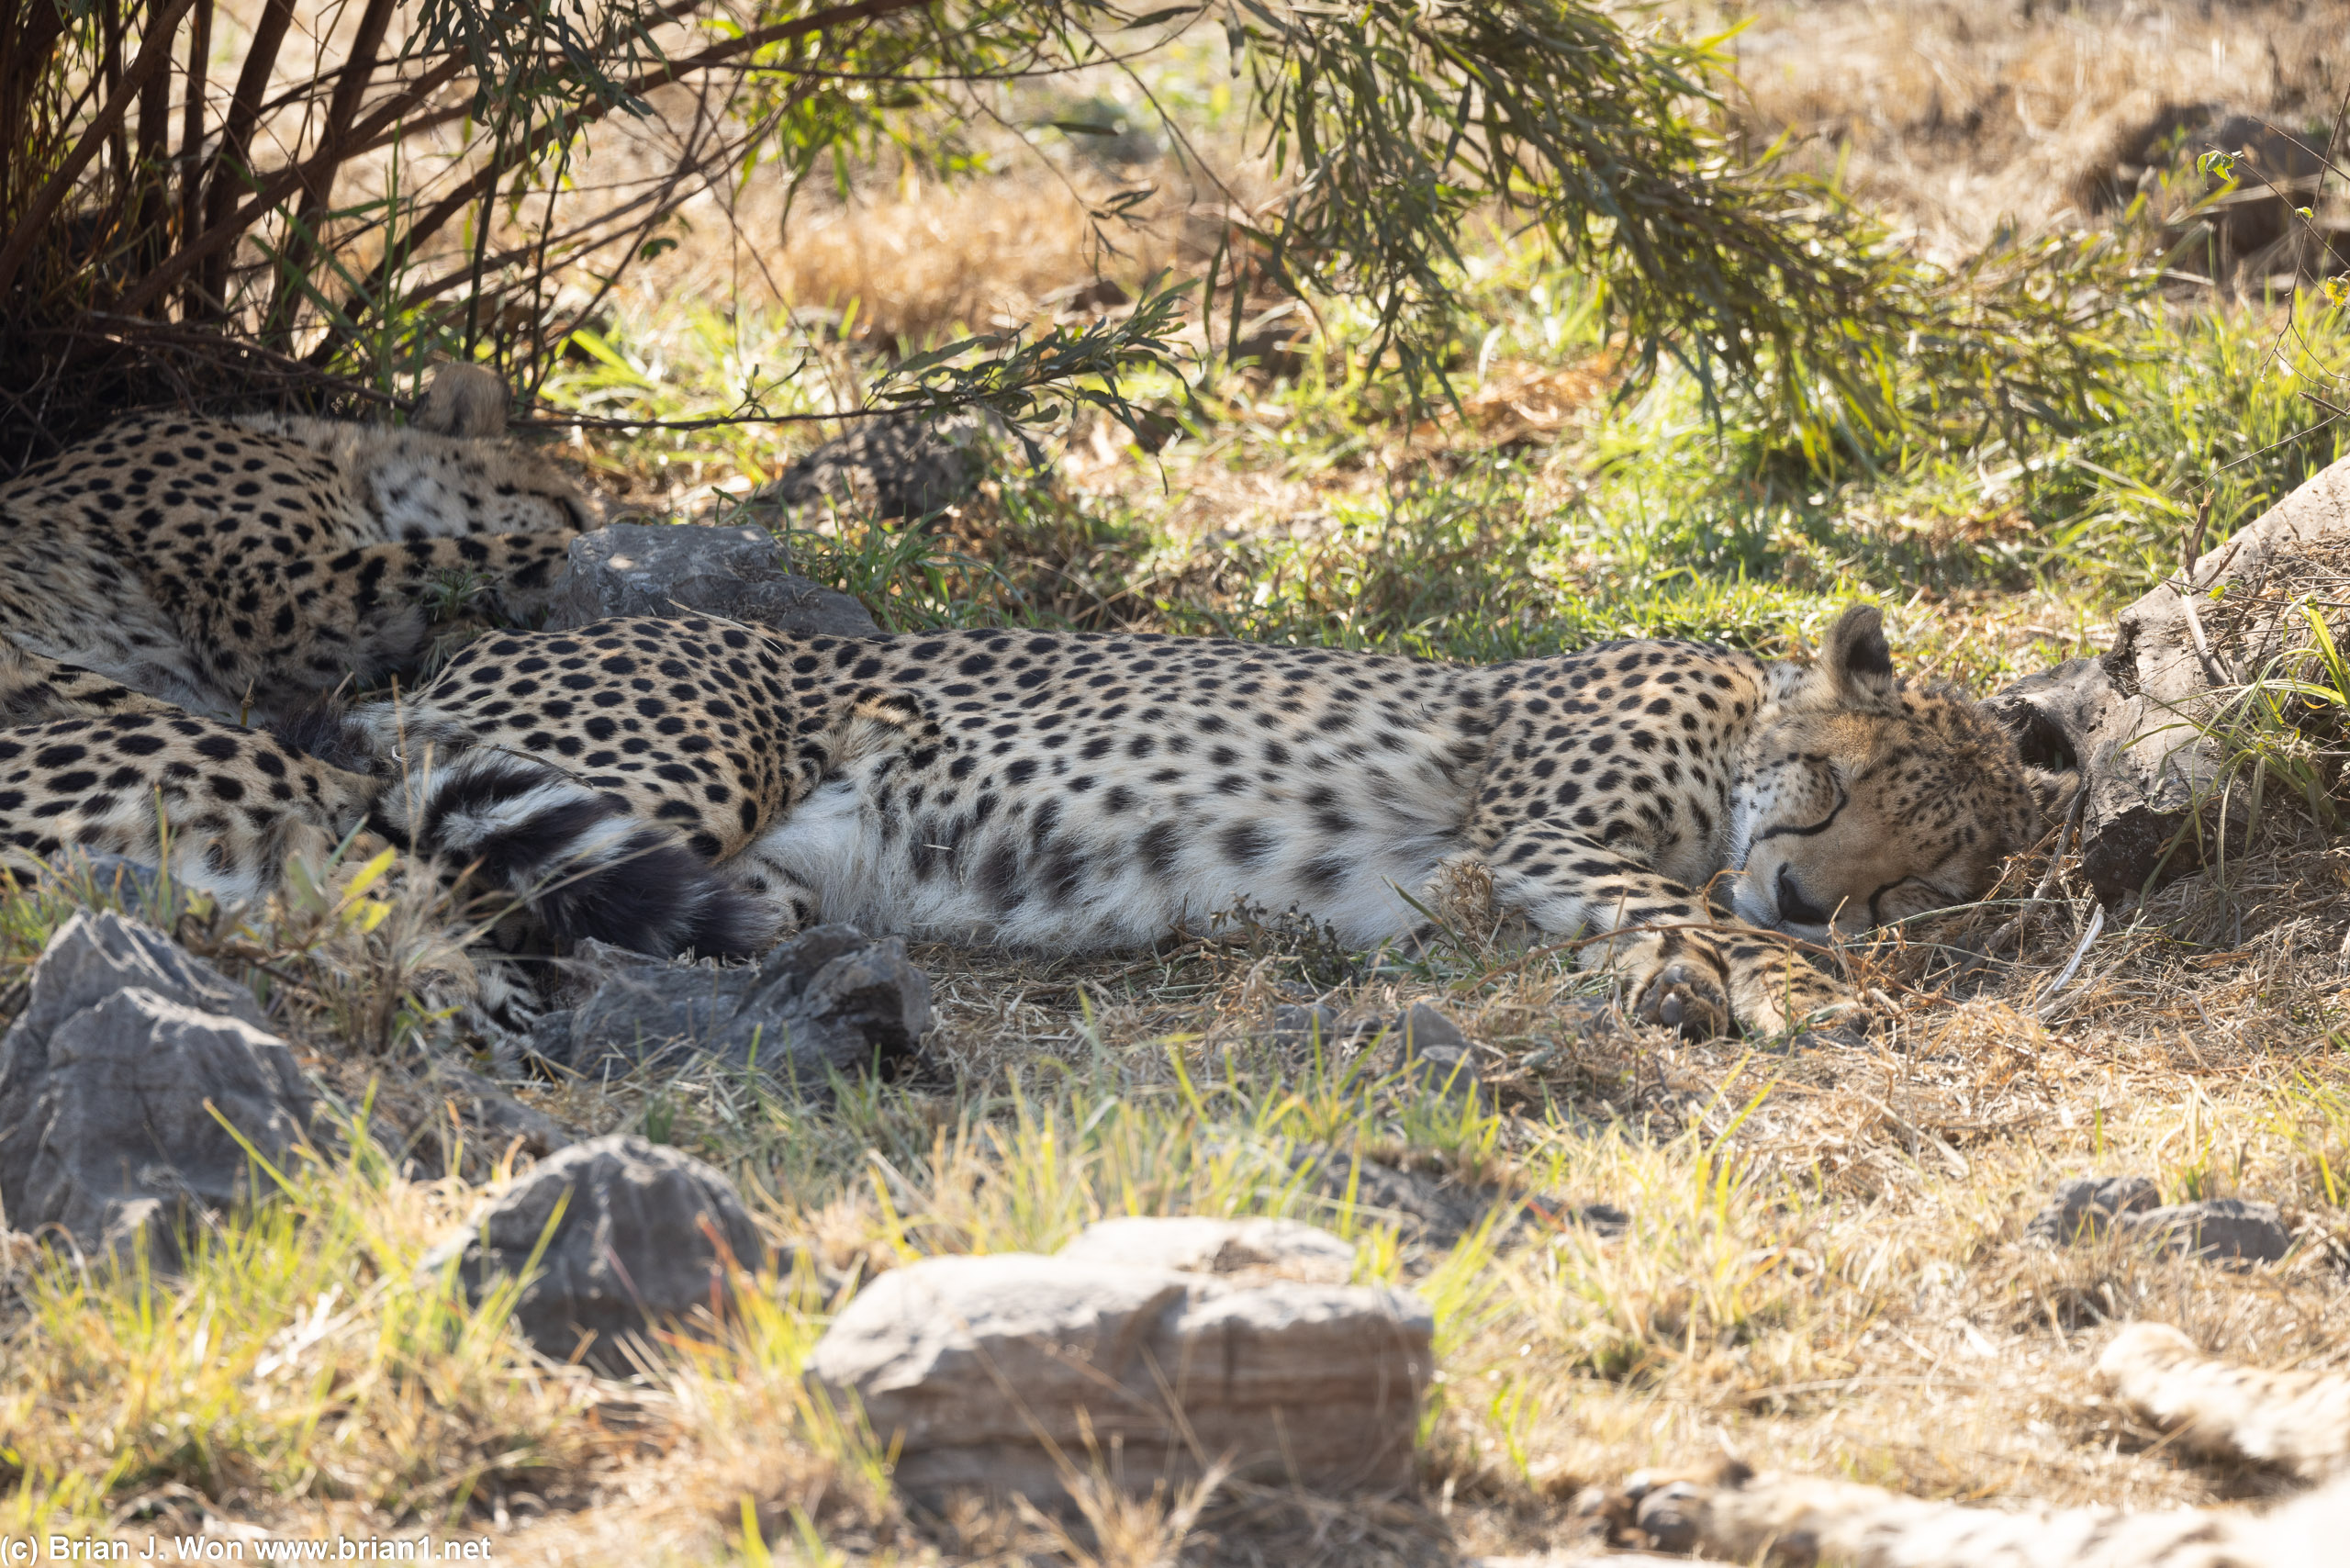 Cheetah nap time.